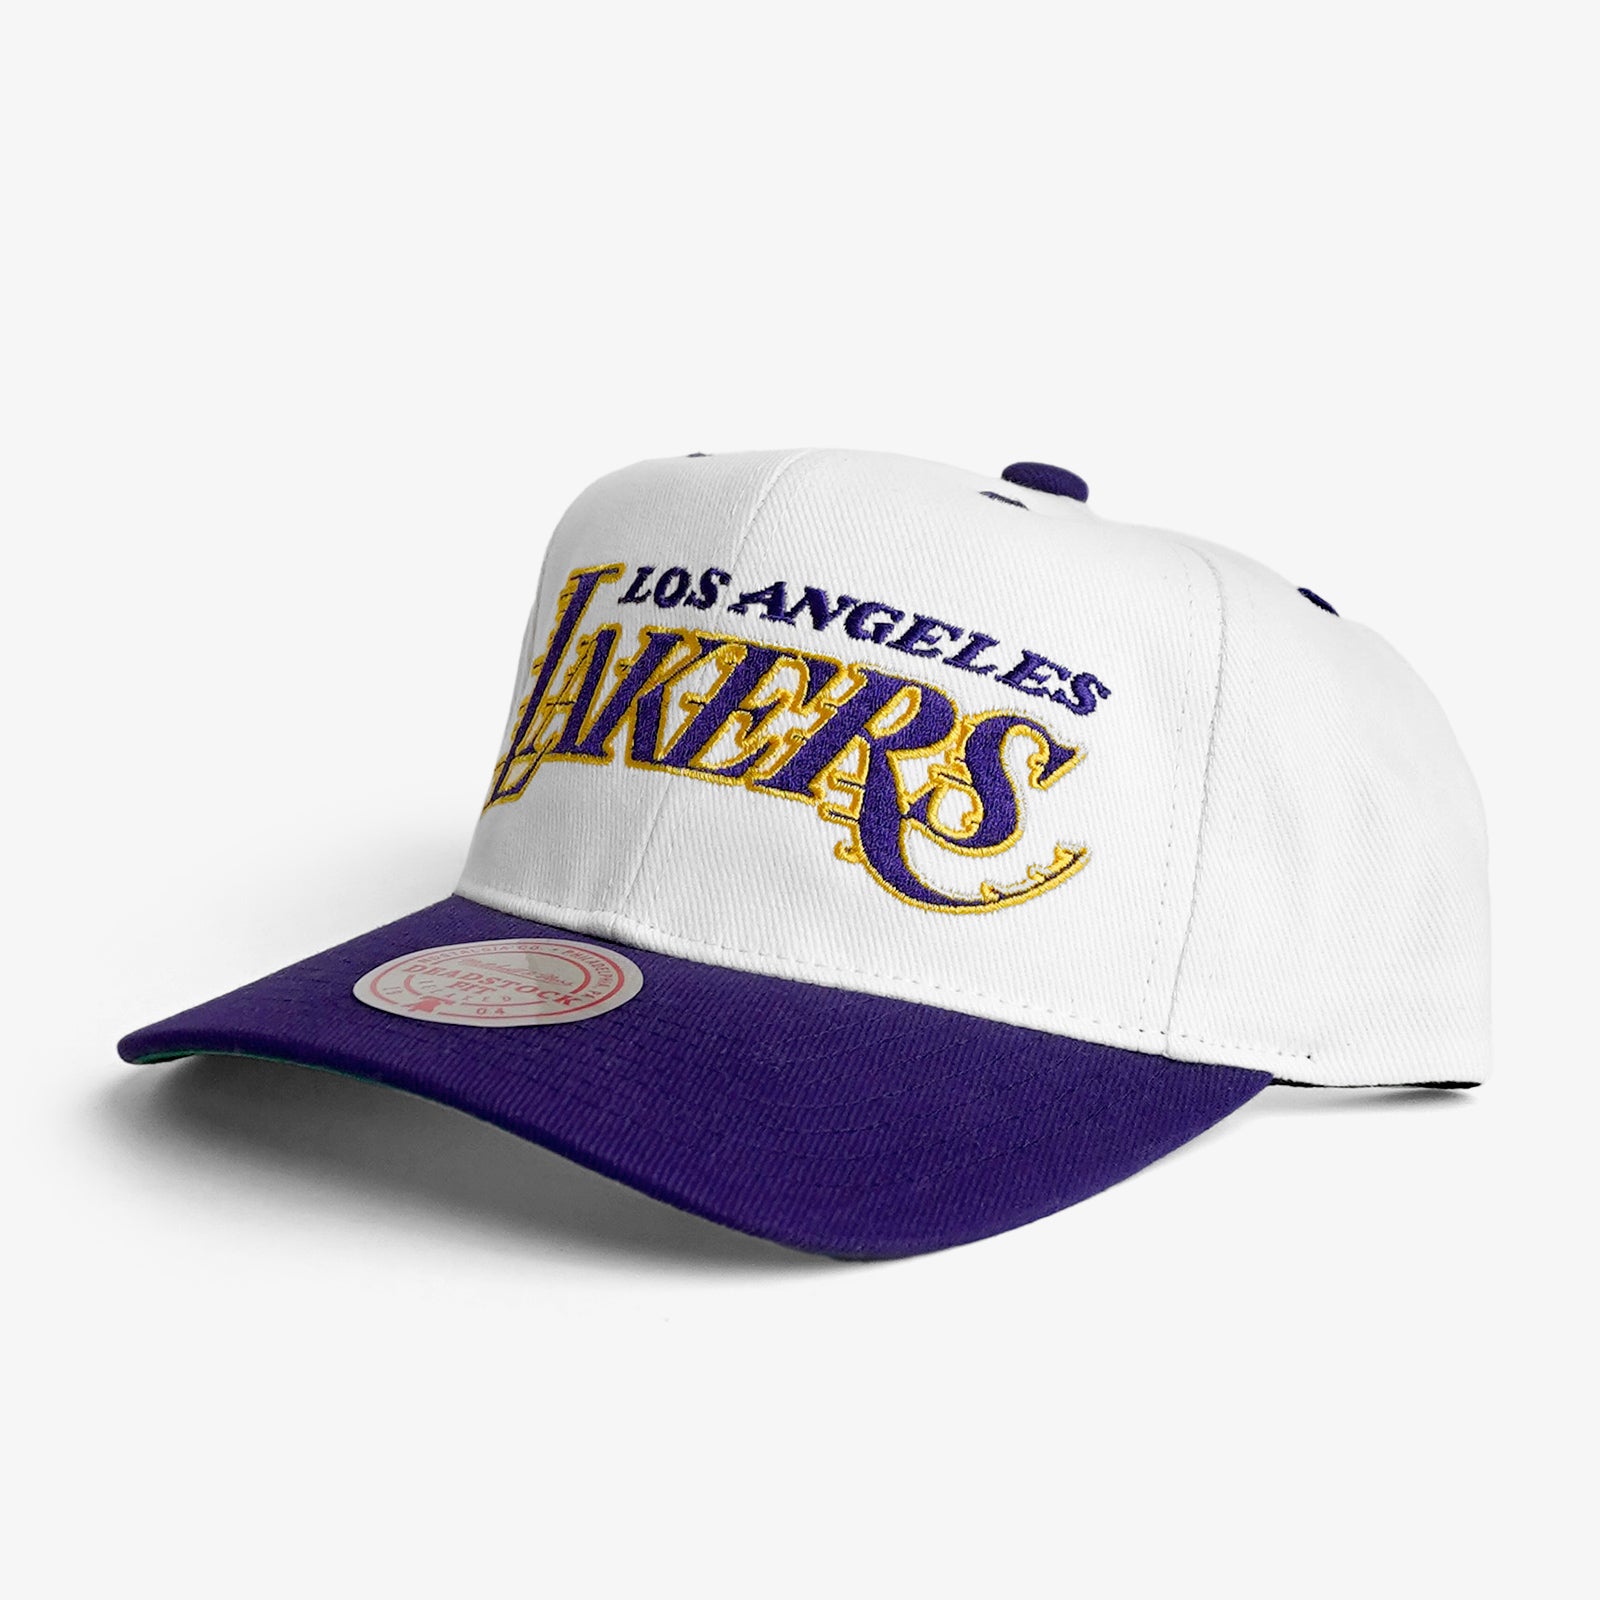 Mitchell & Ness x NBA Lakers Off White Snapback Hat